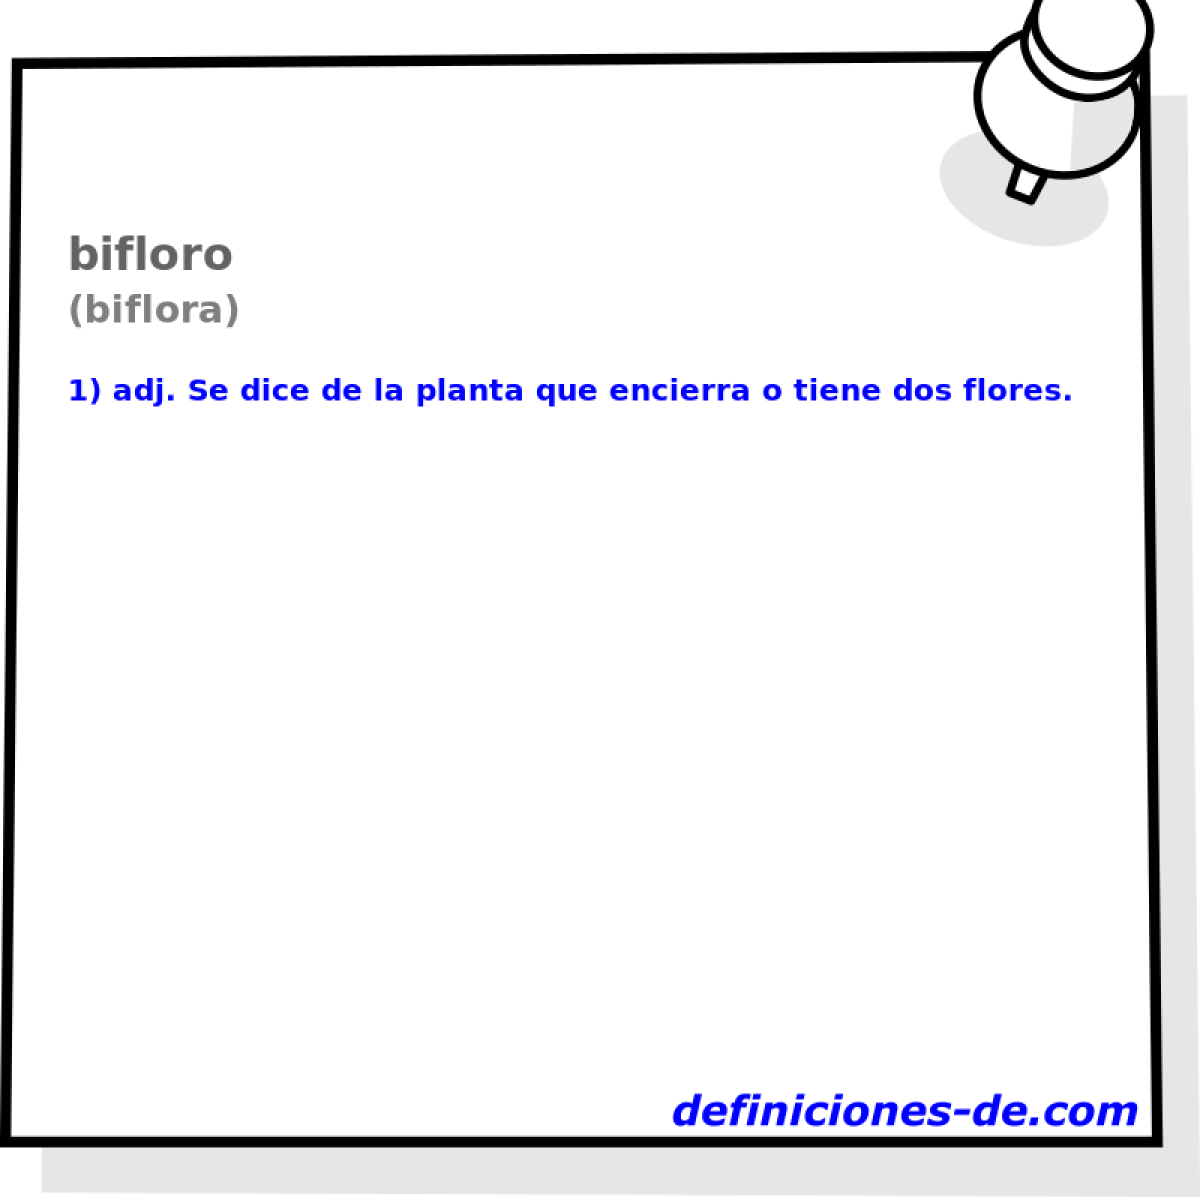 bifloro (biflora)